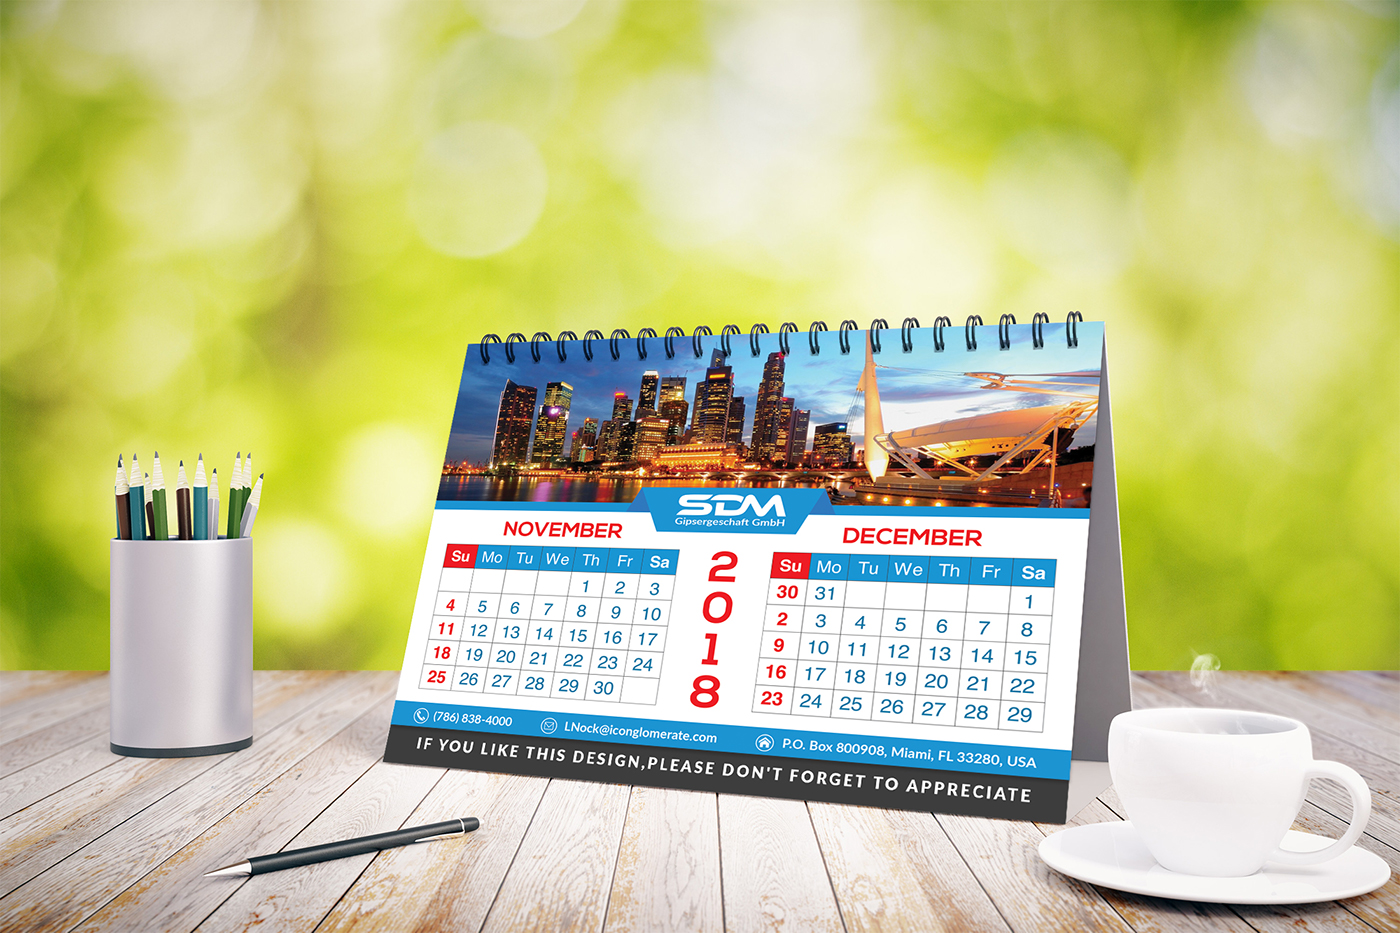 free desk calendar calender 2018 Desk Calendar 2018 branding  Most view calendar Mockup Free Desk Calendar